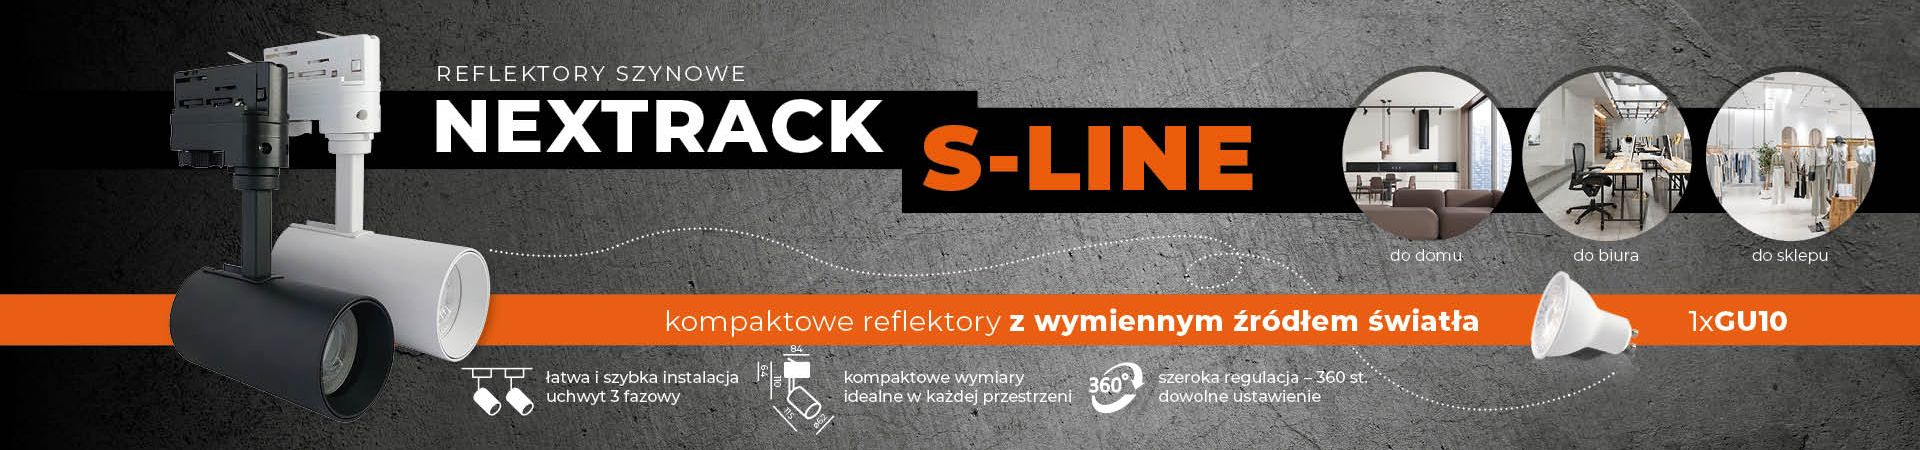 Nextrack S-Line_pl